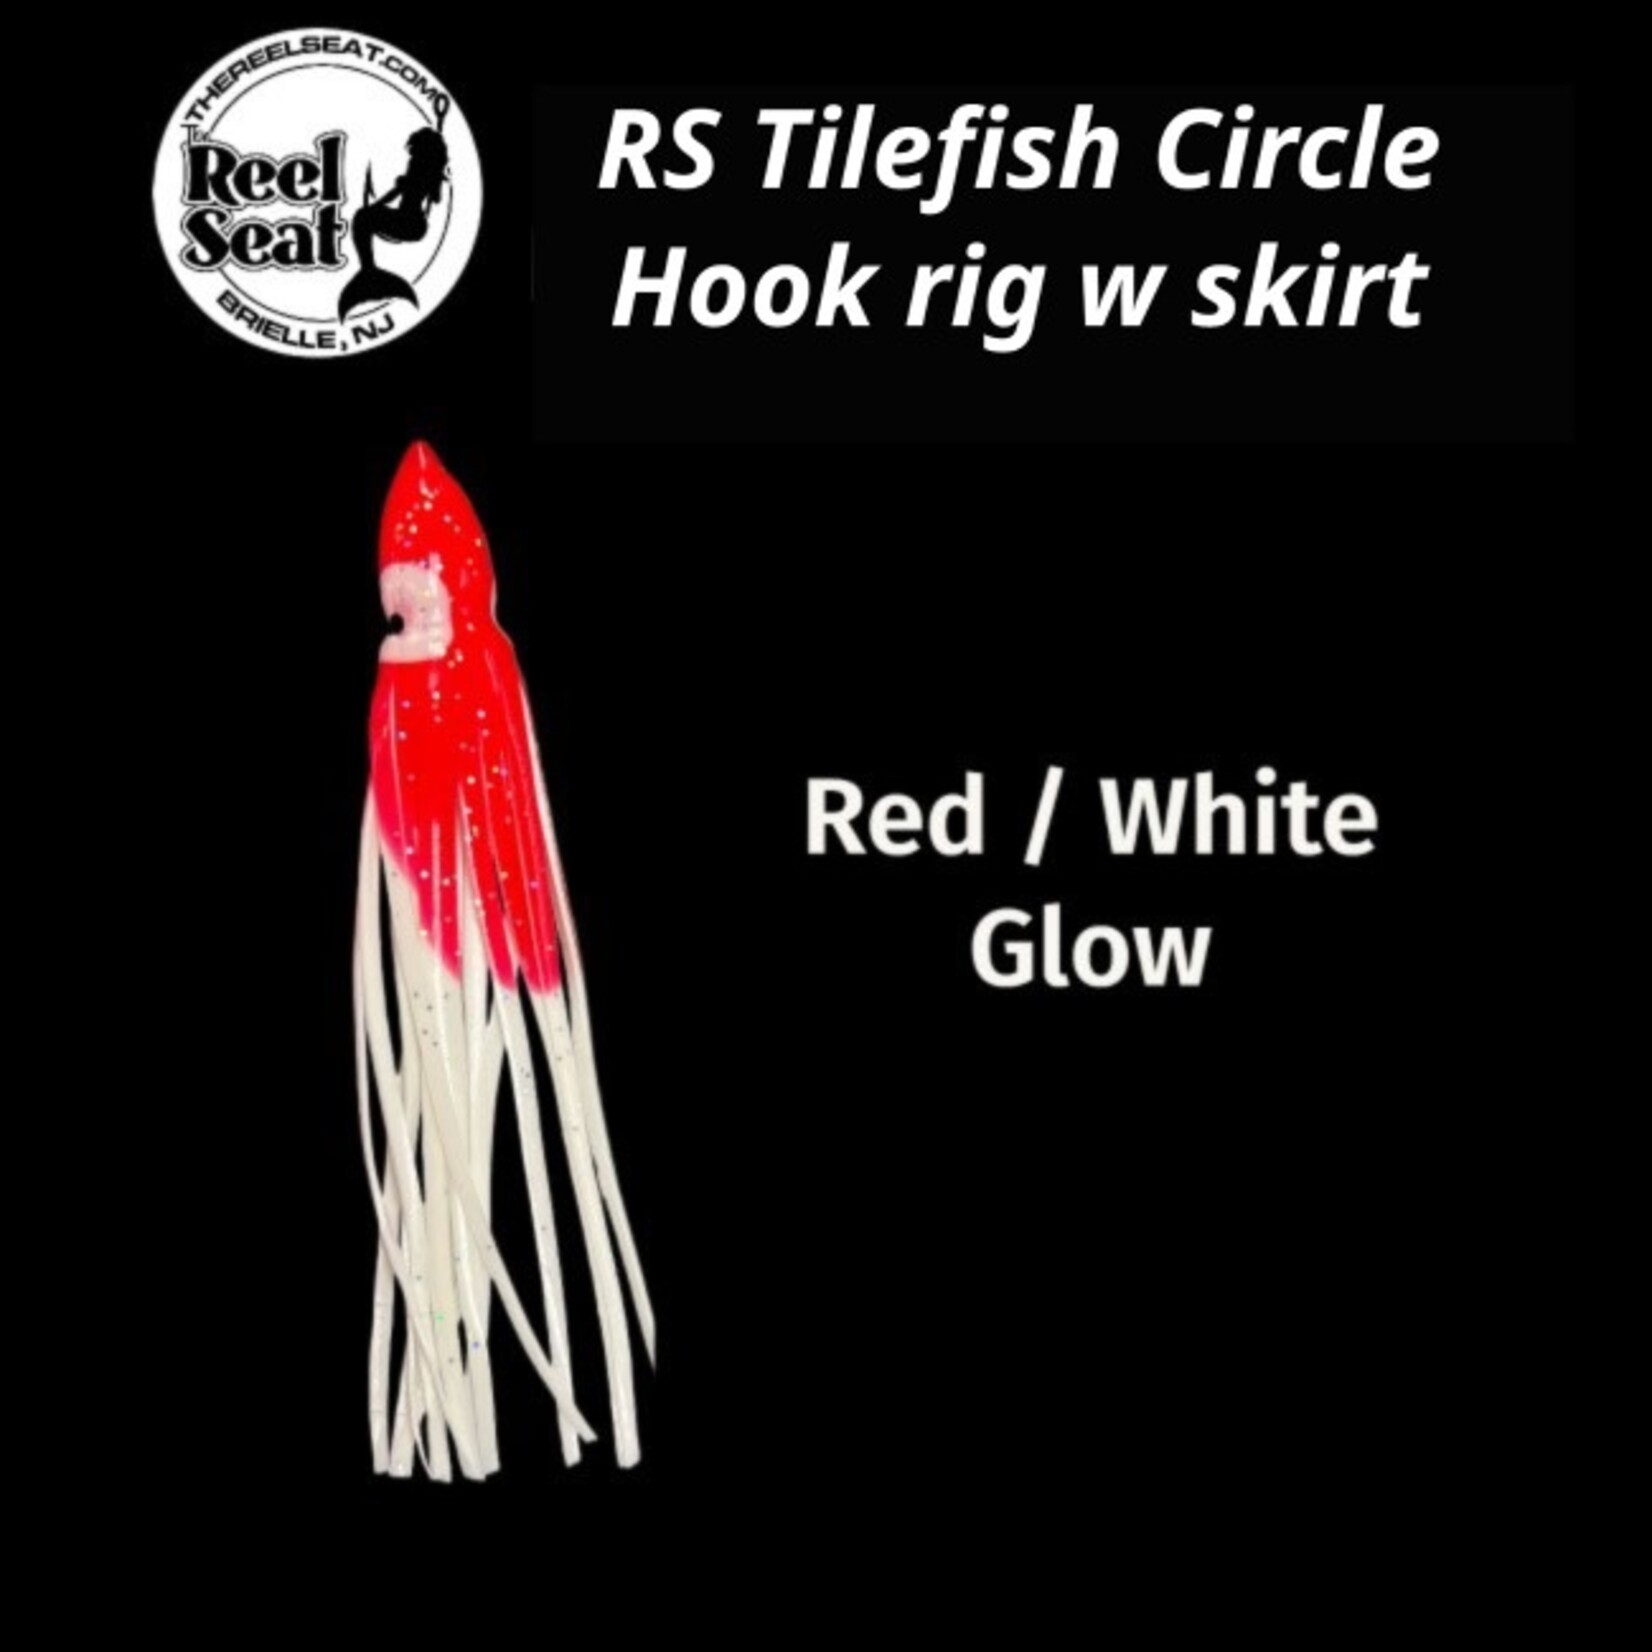 The Reel Seat RS Tilefish Circle Hook Rig w/ skirt